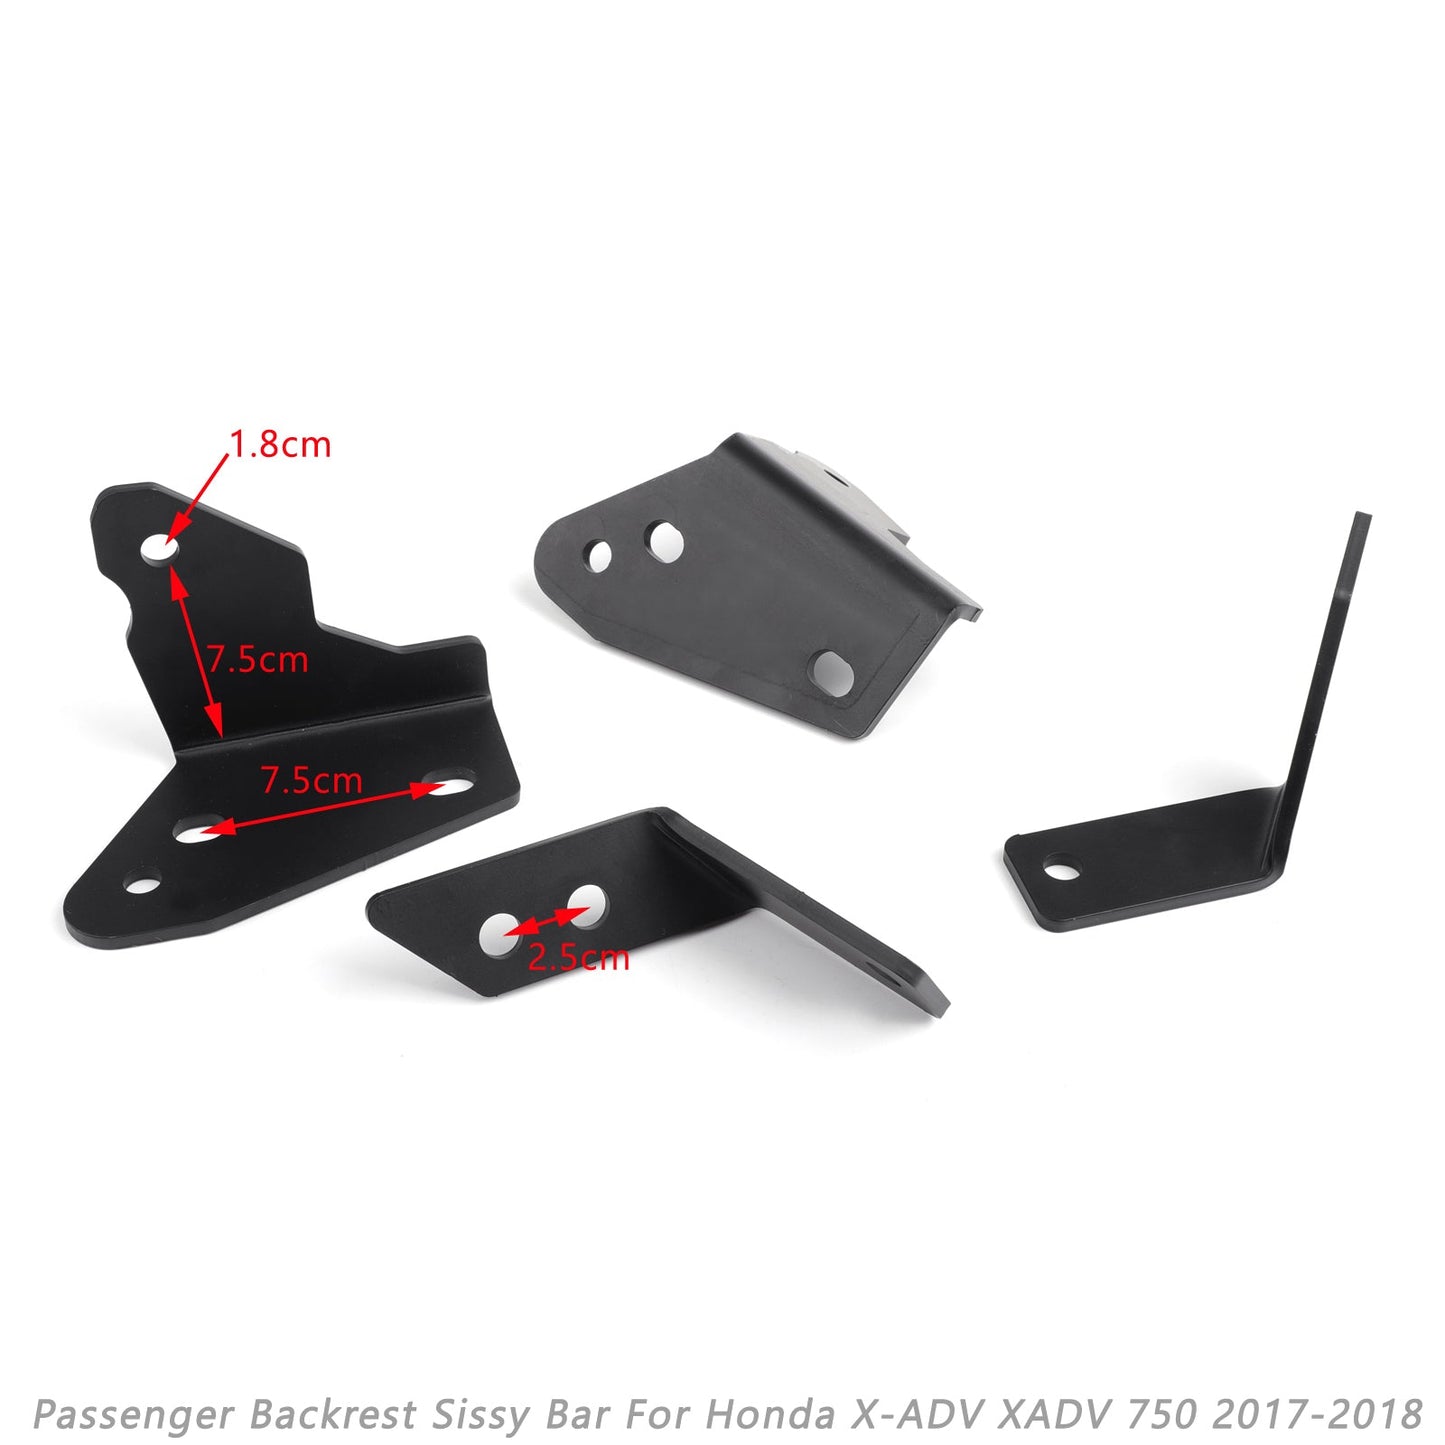 1x Passenger Backrest Support Sissy Bar Fits Honda X-ADV XADV 750 2017-2018